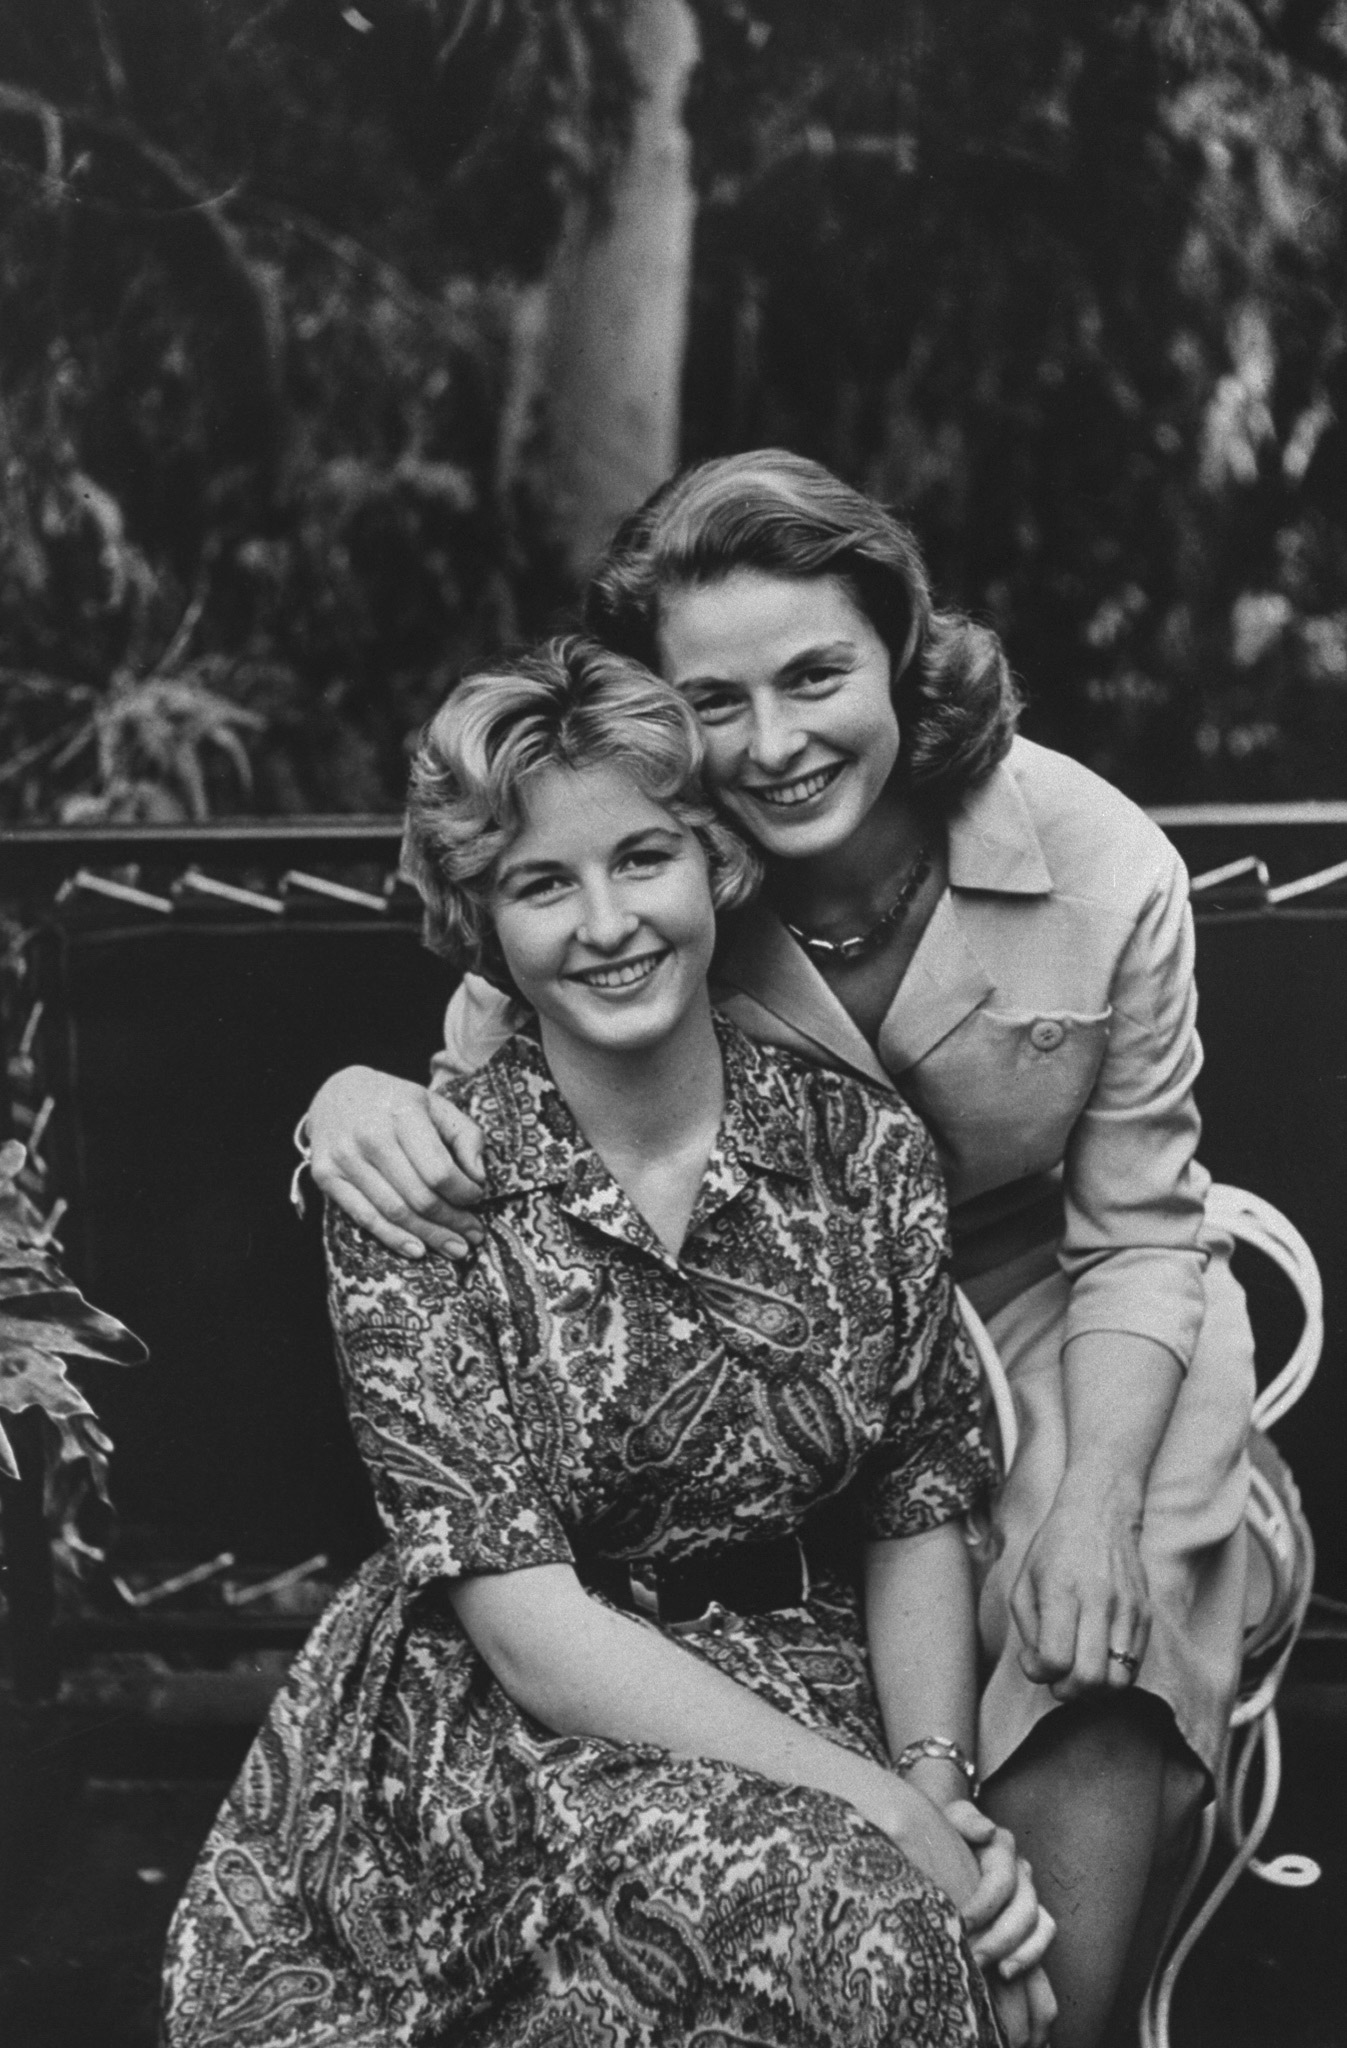 Ingrid Bergman and her daughter, Pia Lindstrom, in 1959.